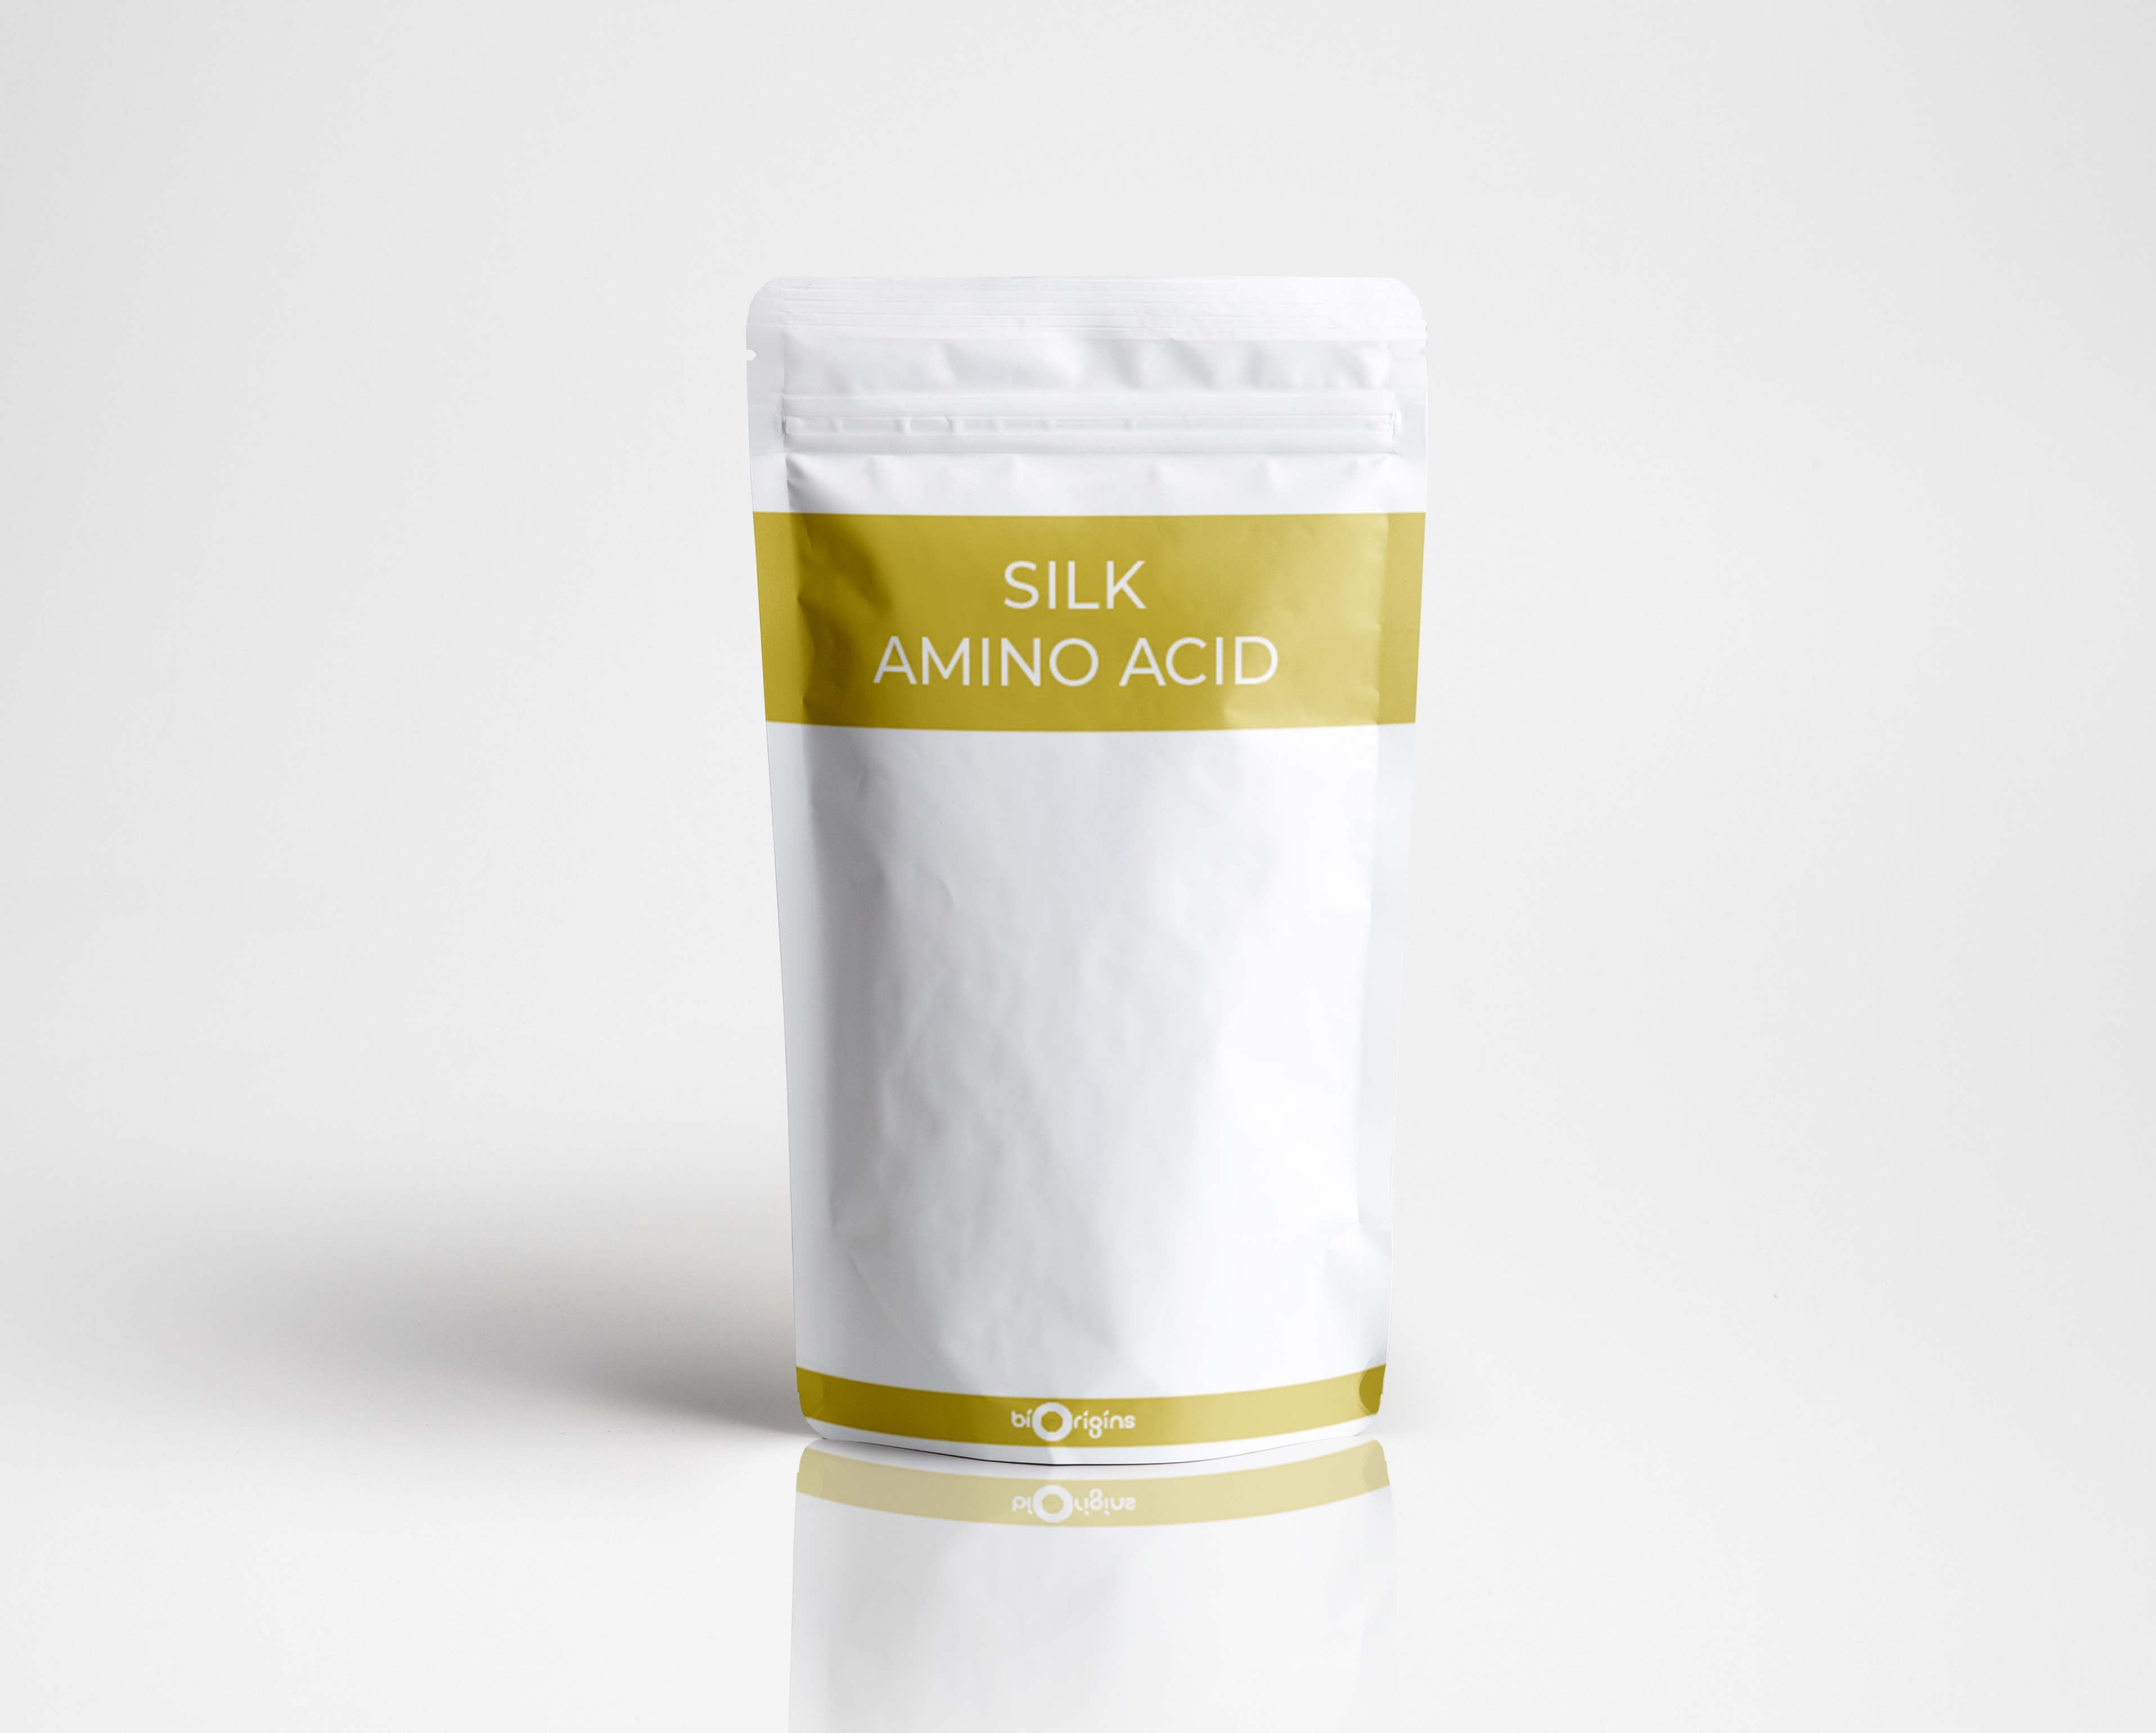 Silk Amino Acid - Raw Materials